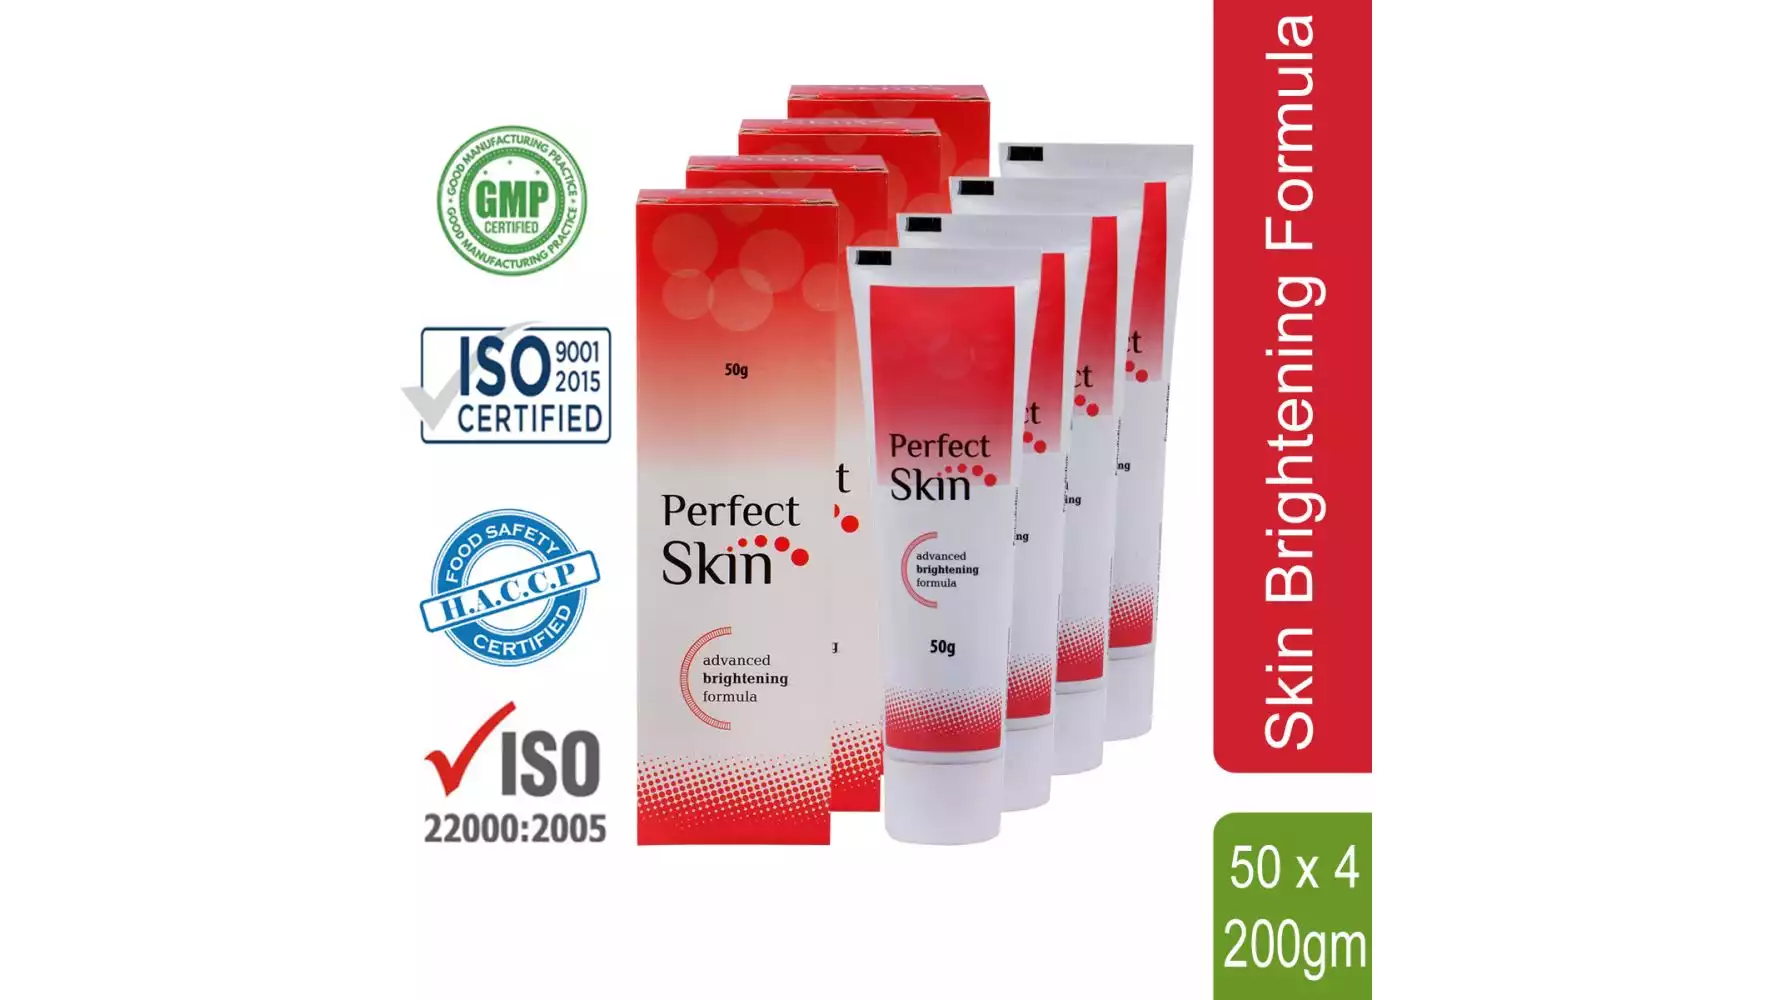 Shivalik Herbals Perfect Skin Cream (50g, Pack of 4)